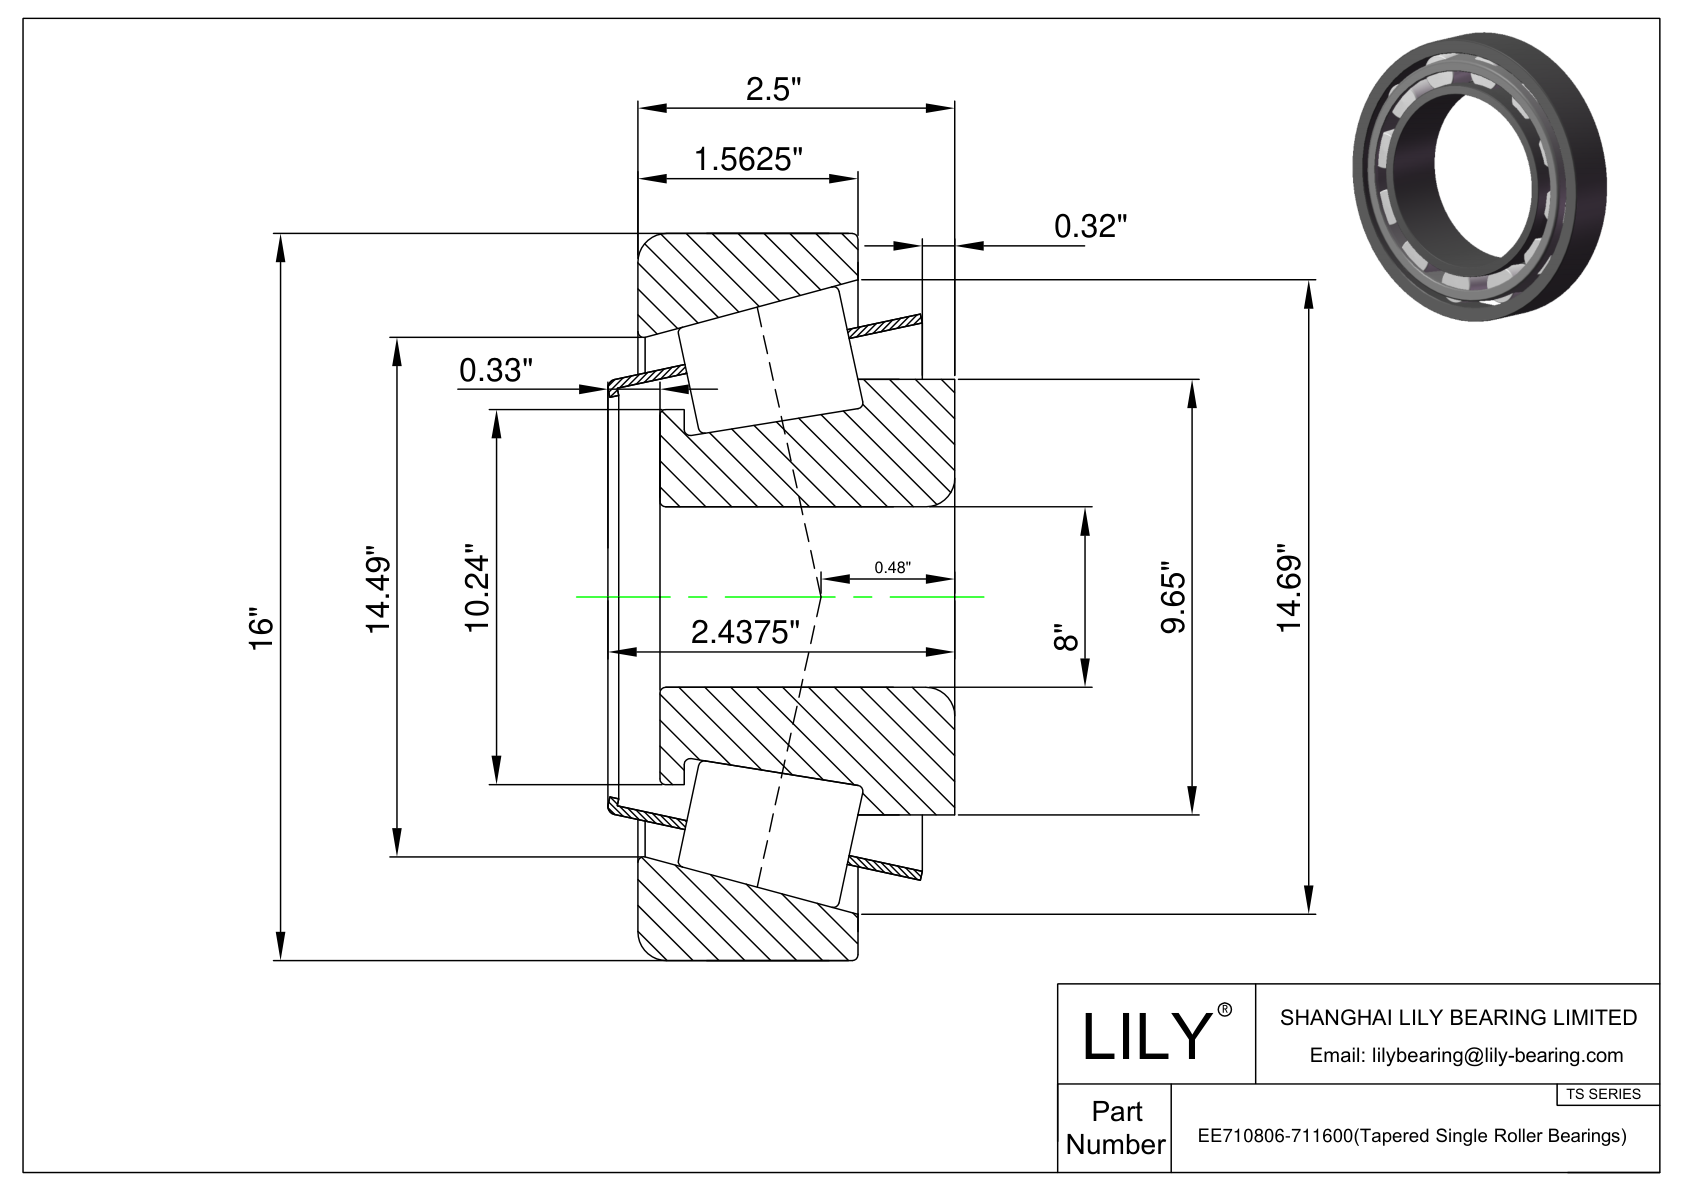 EE710806-711600 TS系列(圆锥单滚子轴承)(英制) CAD图形